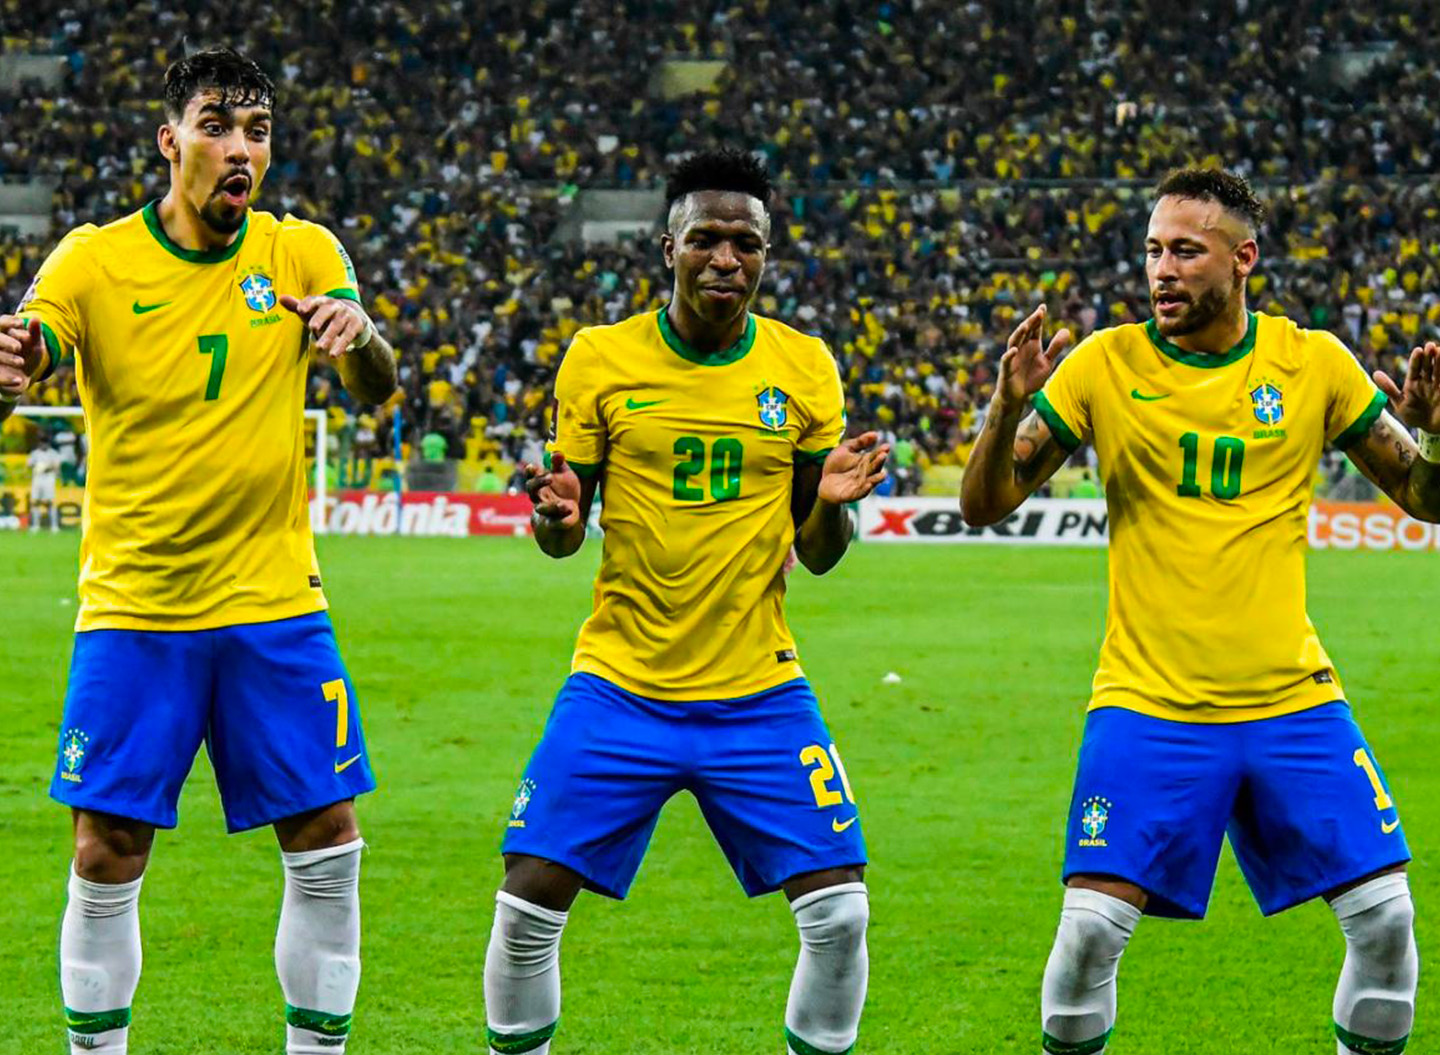 Excluir o Brasil das próximas grandes competições?